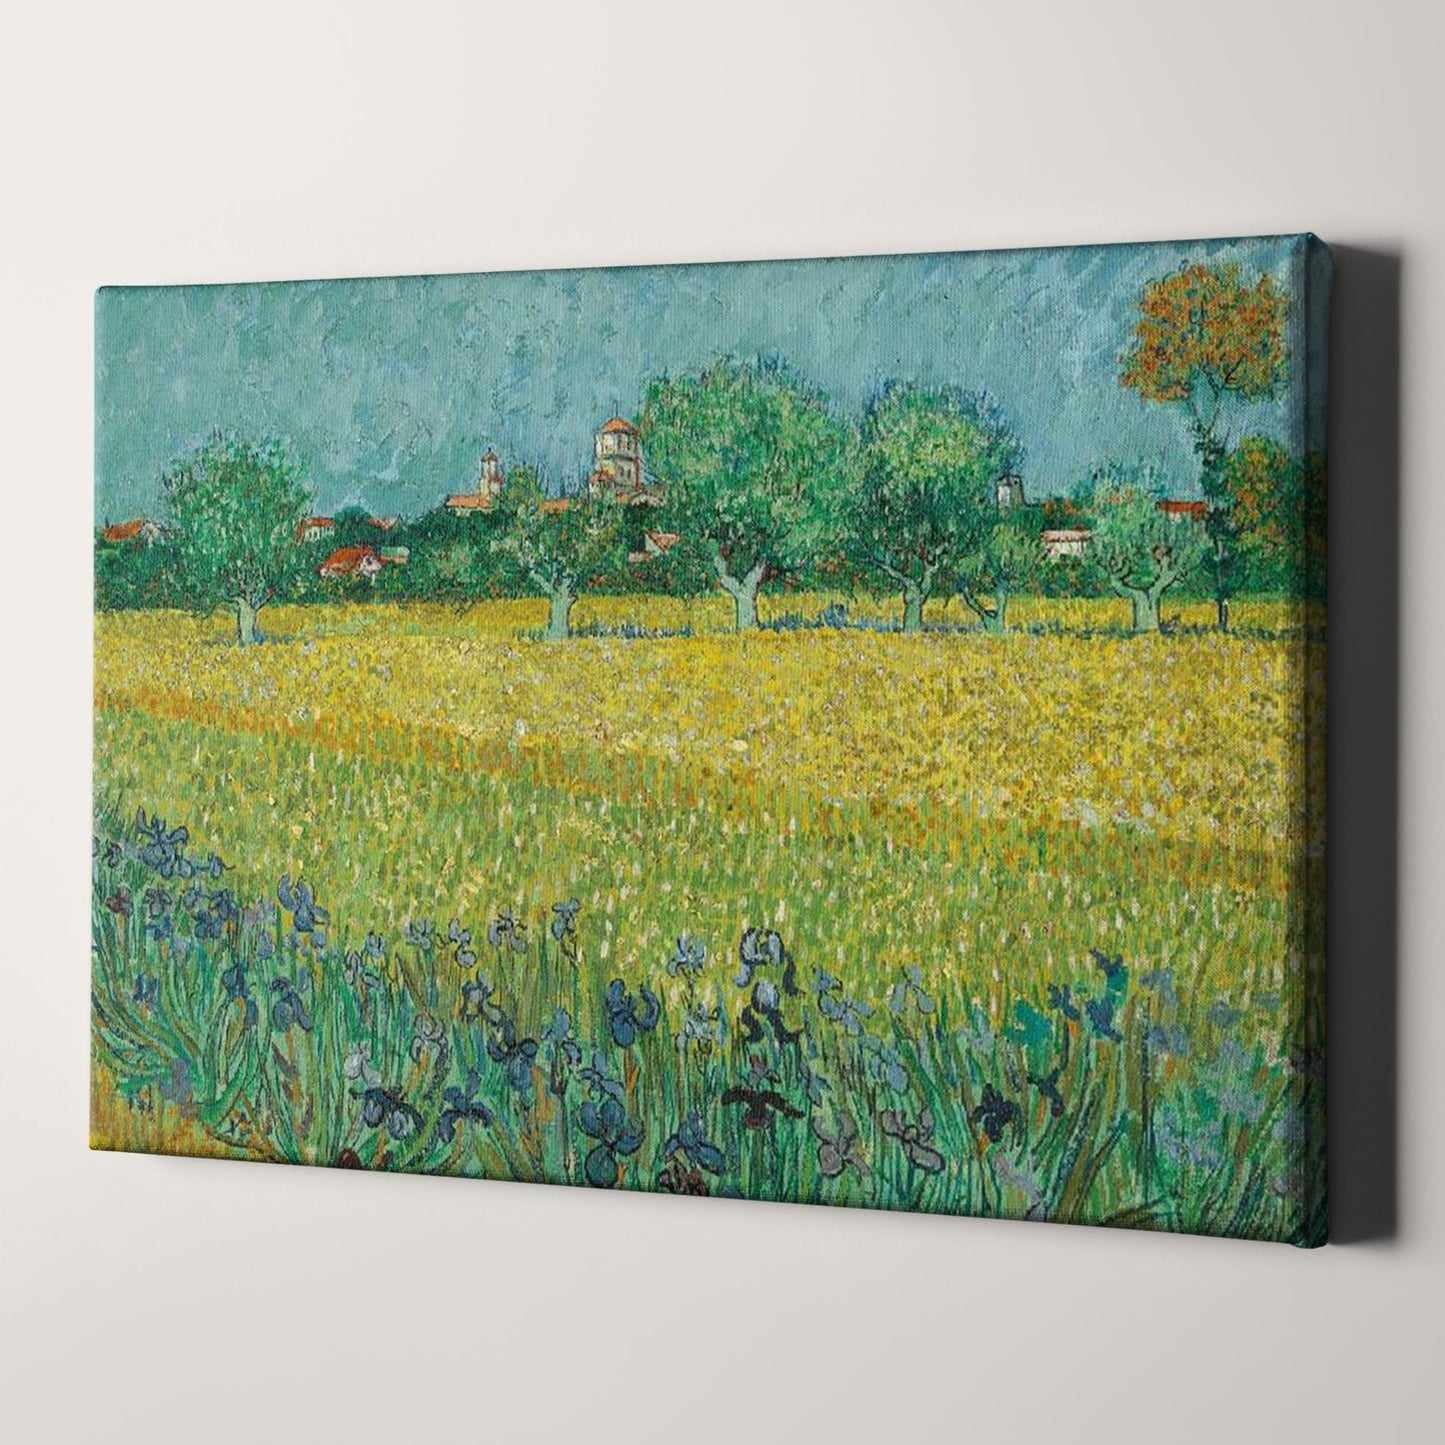 Field with Irises near Arles (1888) by Van Gogh